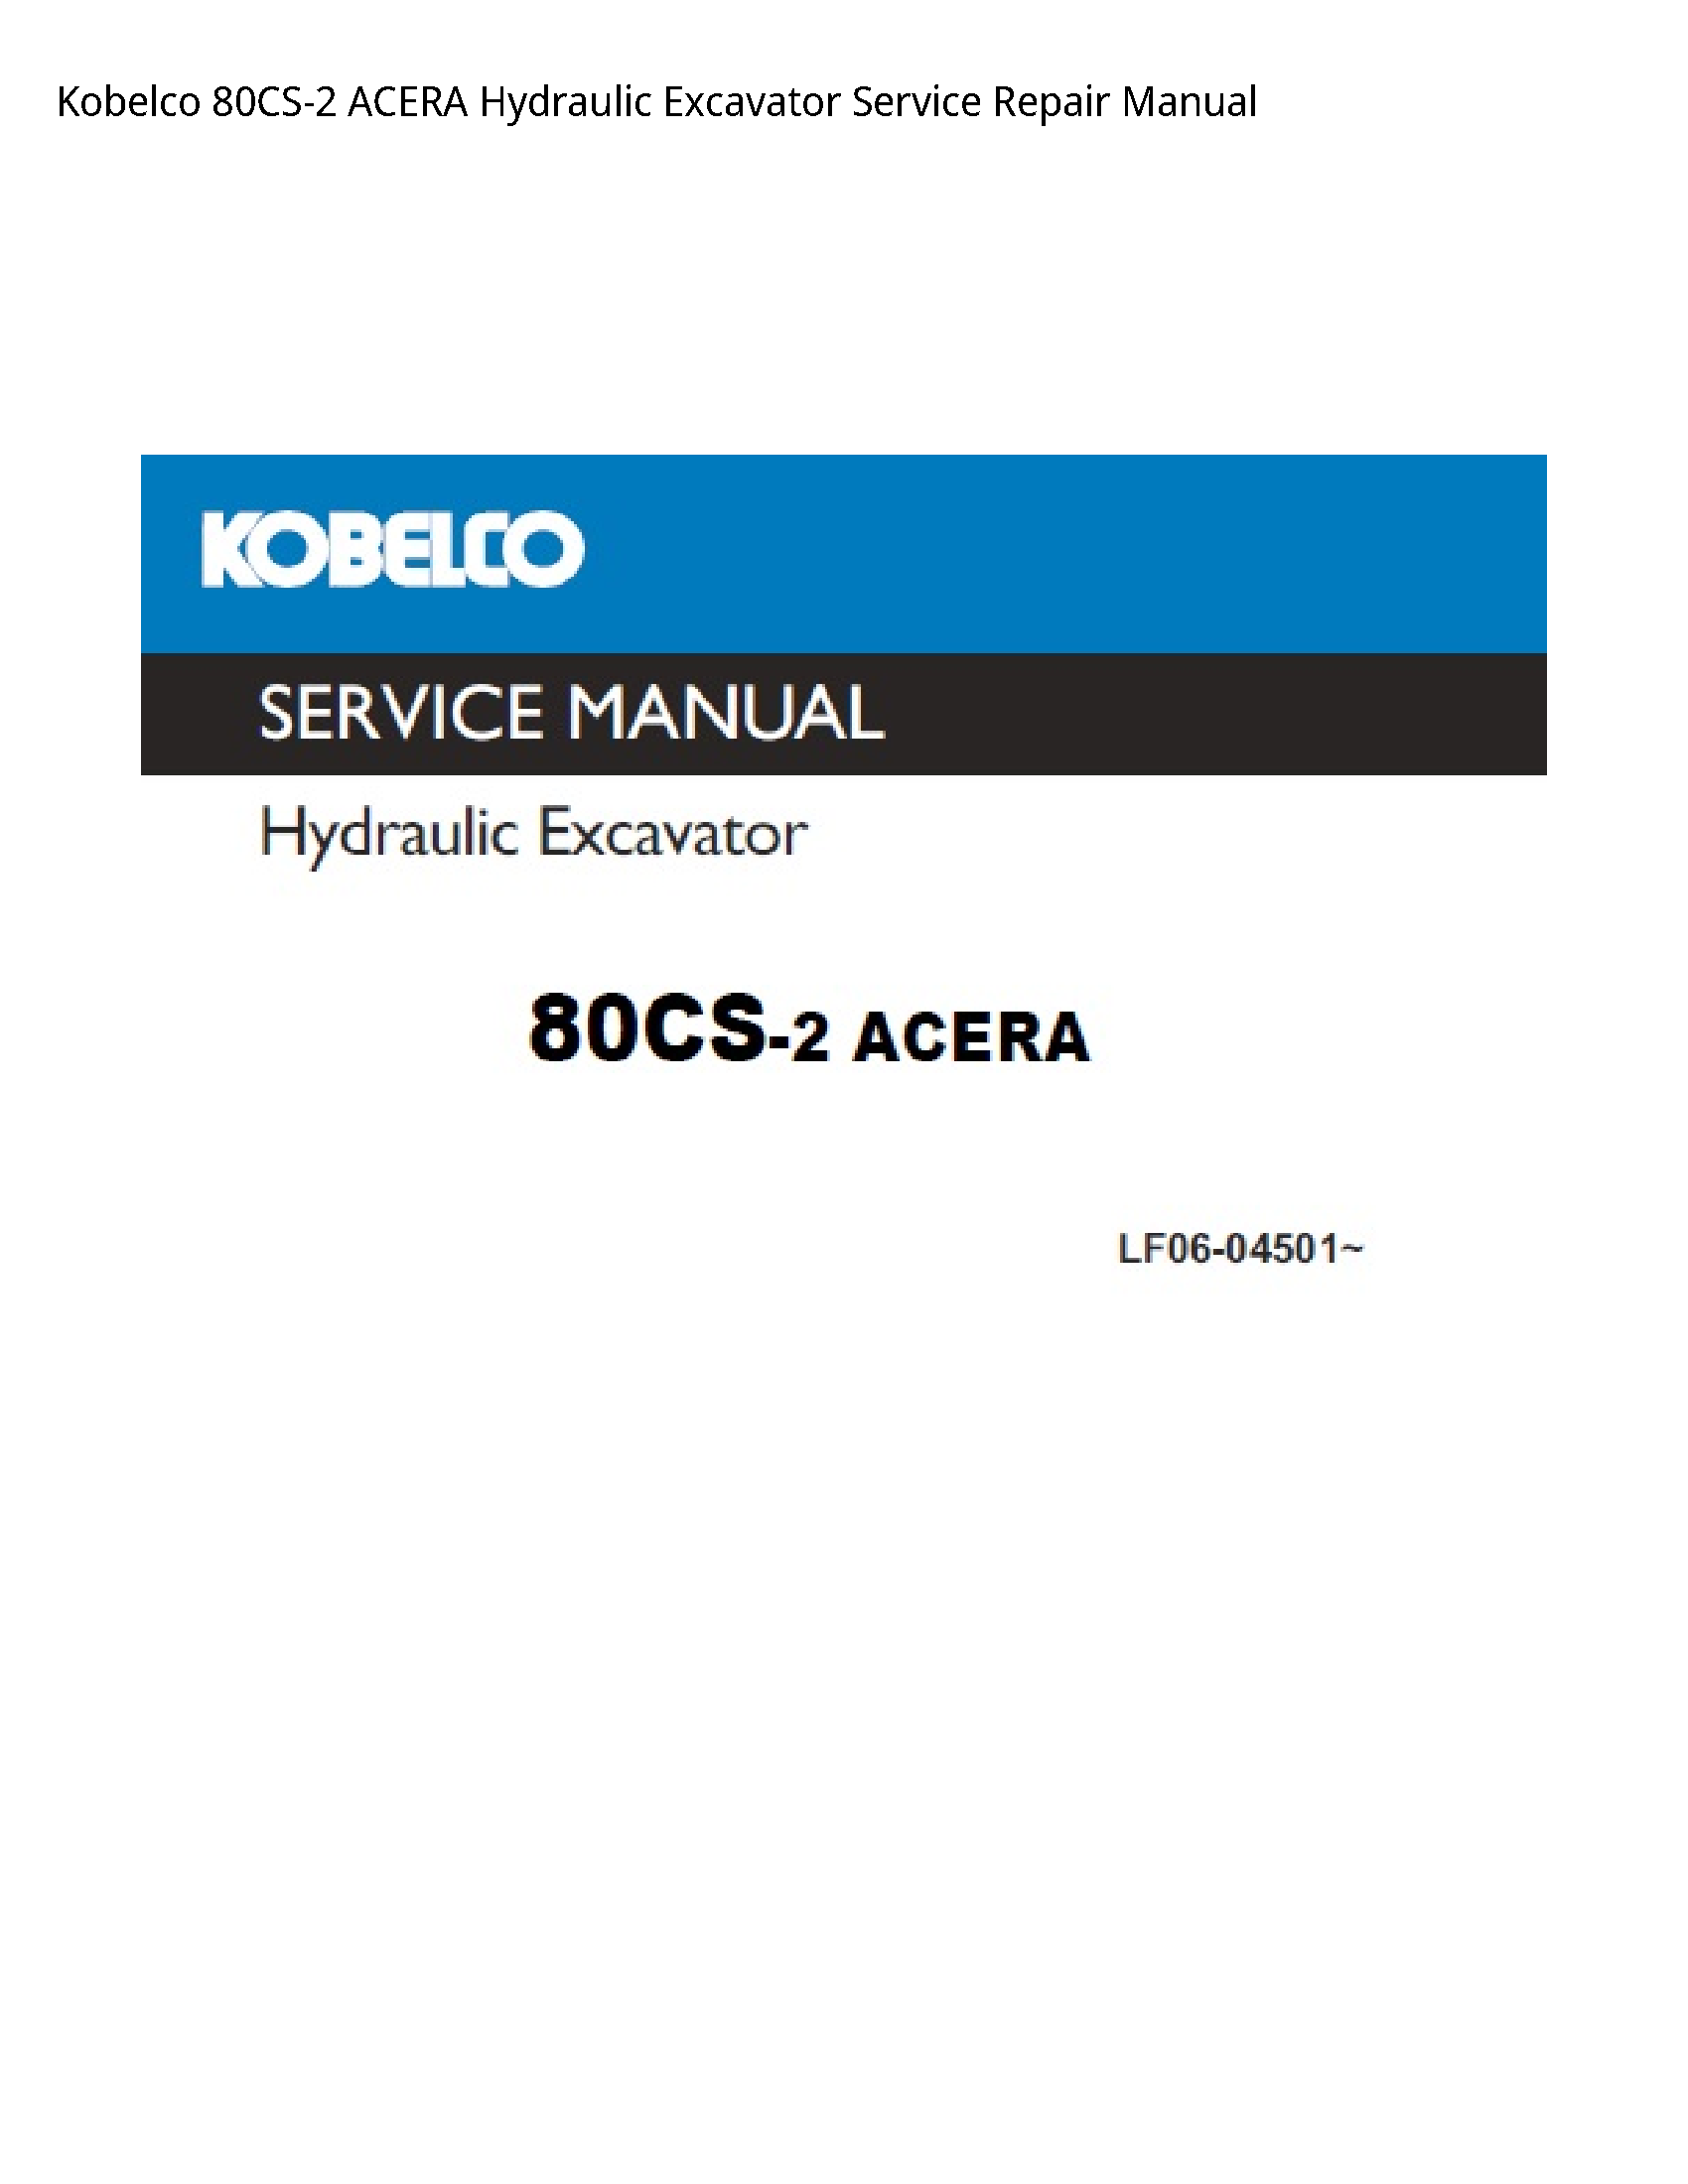 Kobelco 80CS-2 ACERA Hydraulic Excavator manual